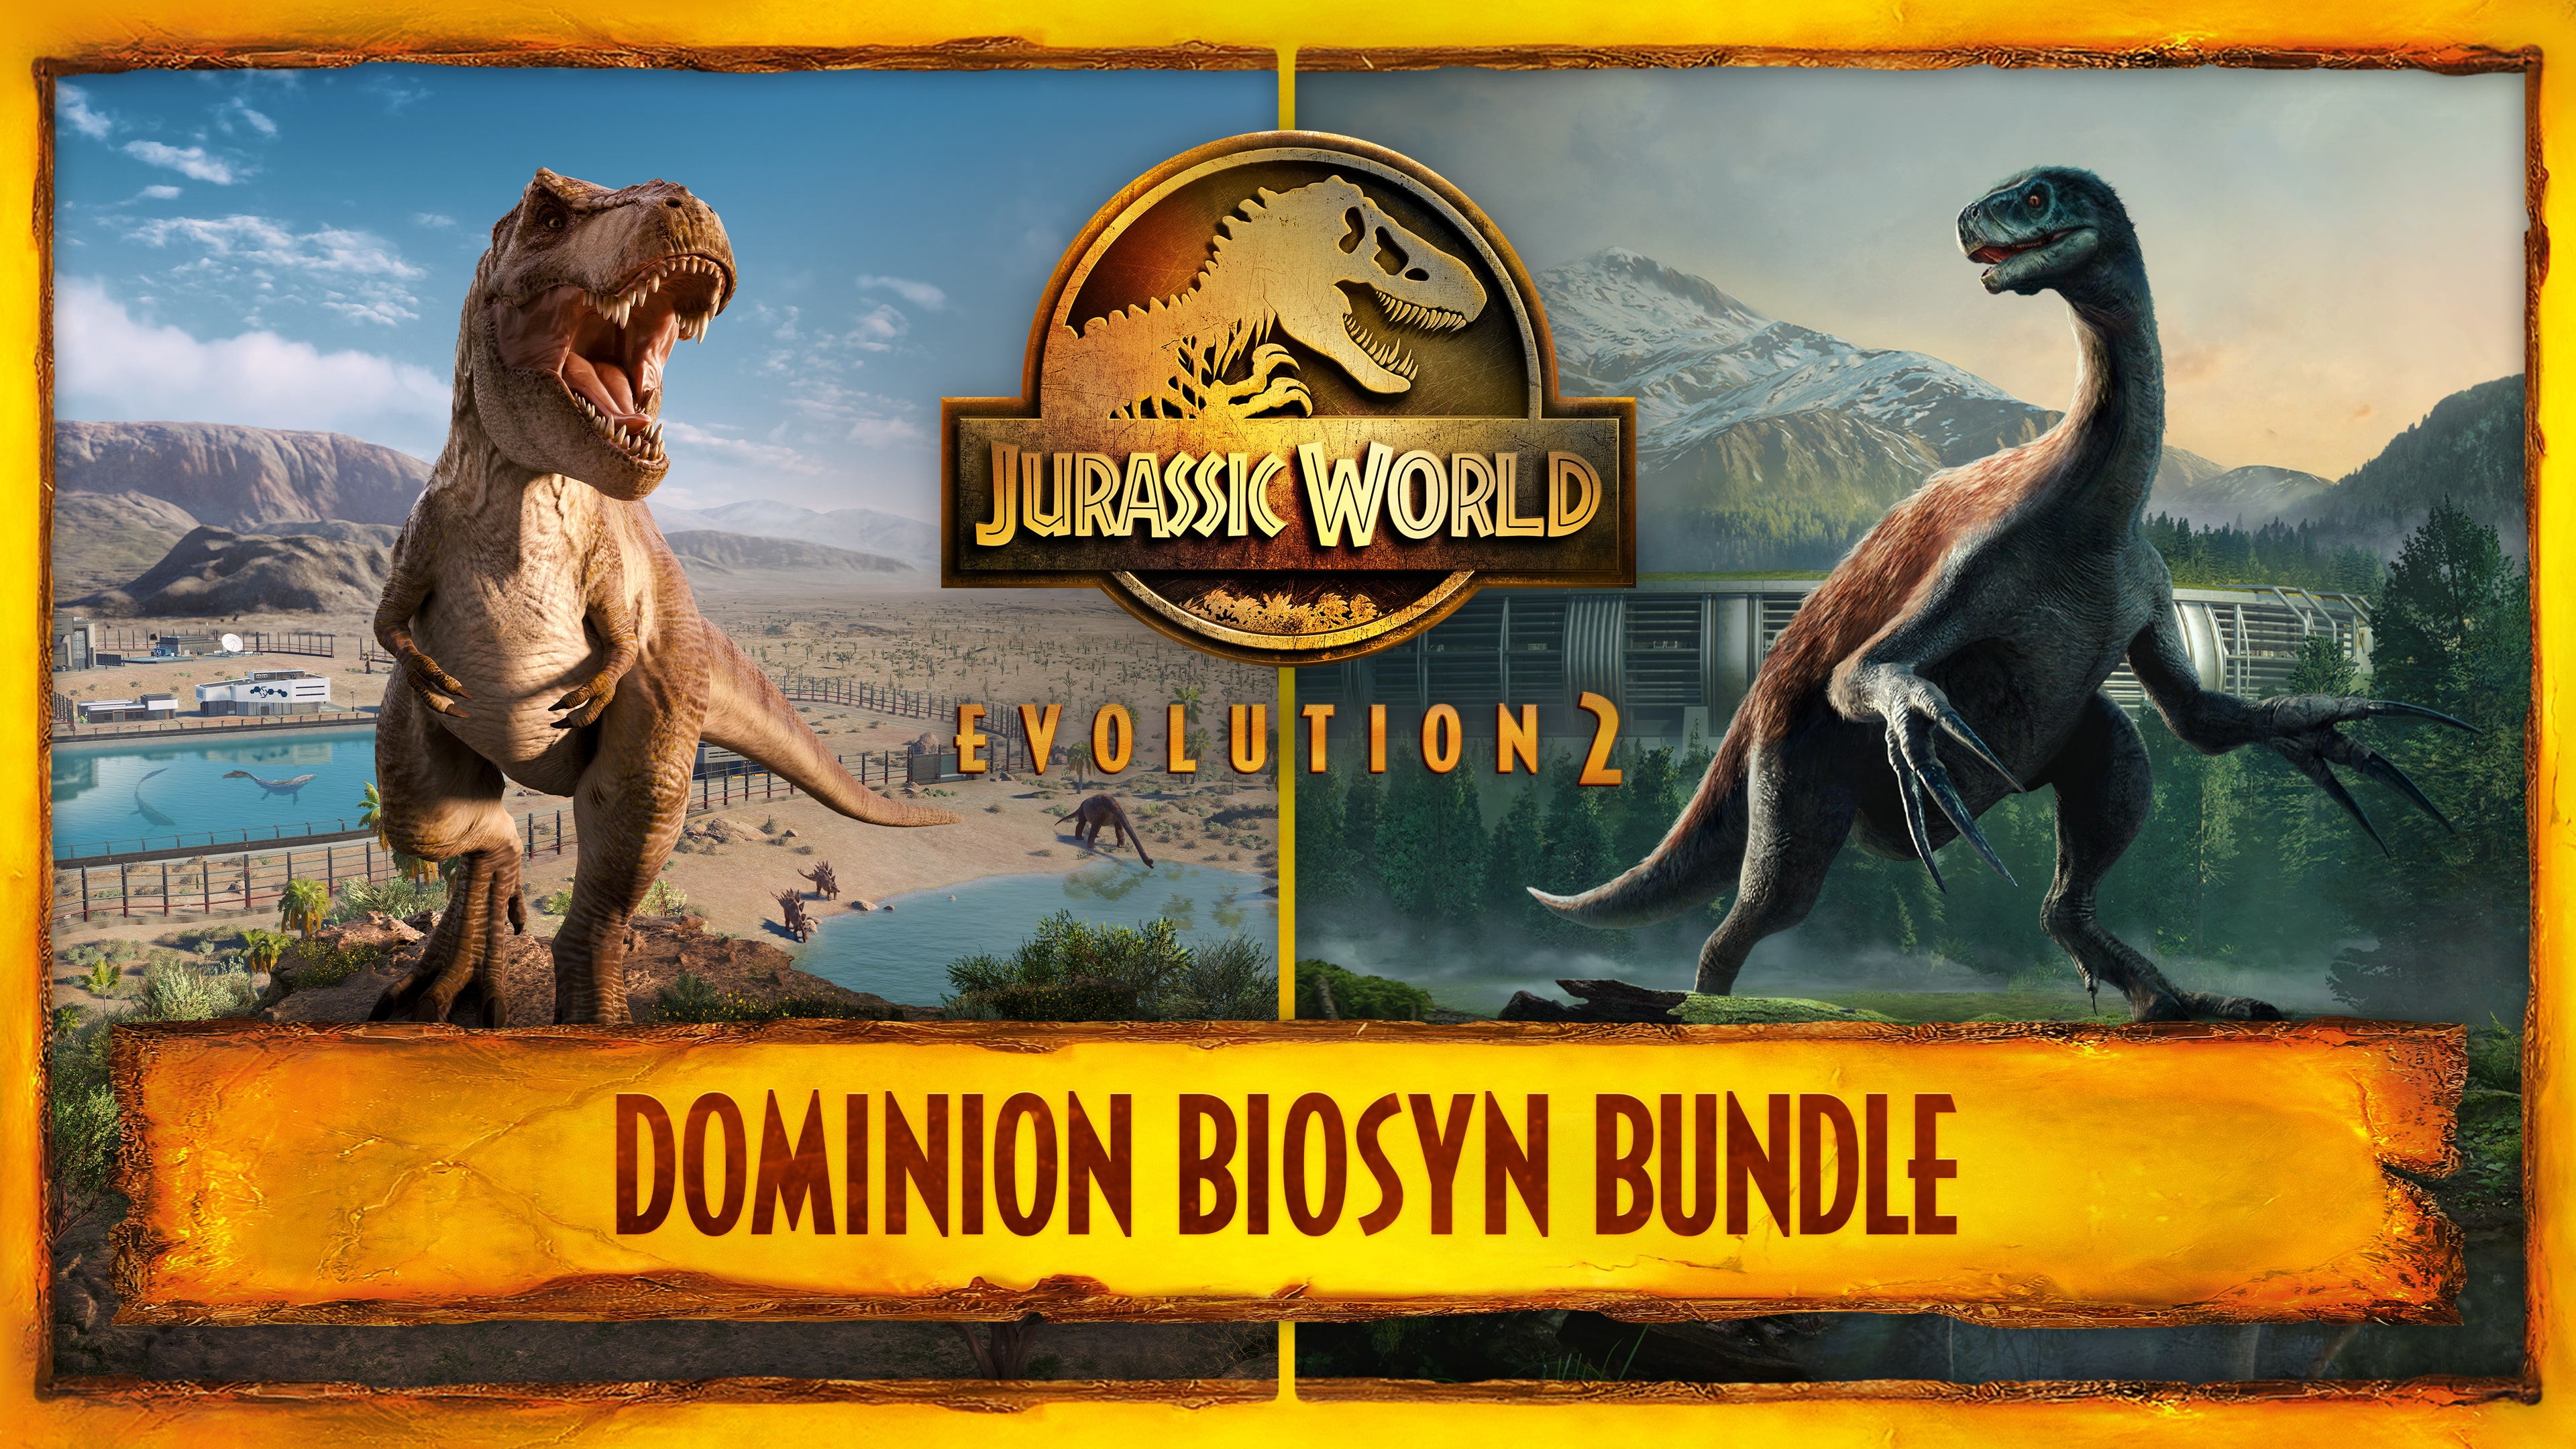 Jurassic World Evolution 2: Dominion Biosyn Bundle (Simplified Chinese, English, Korean, Japanese, Traditional Chinese)